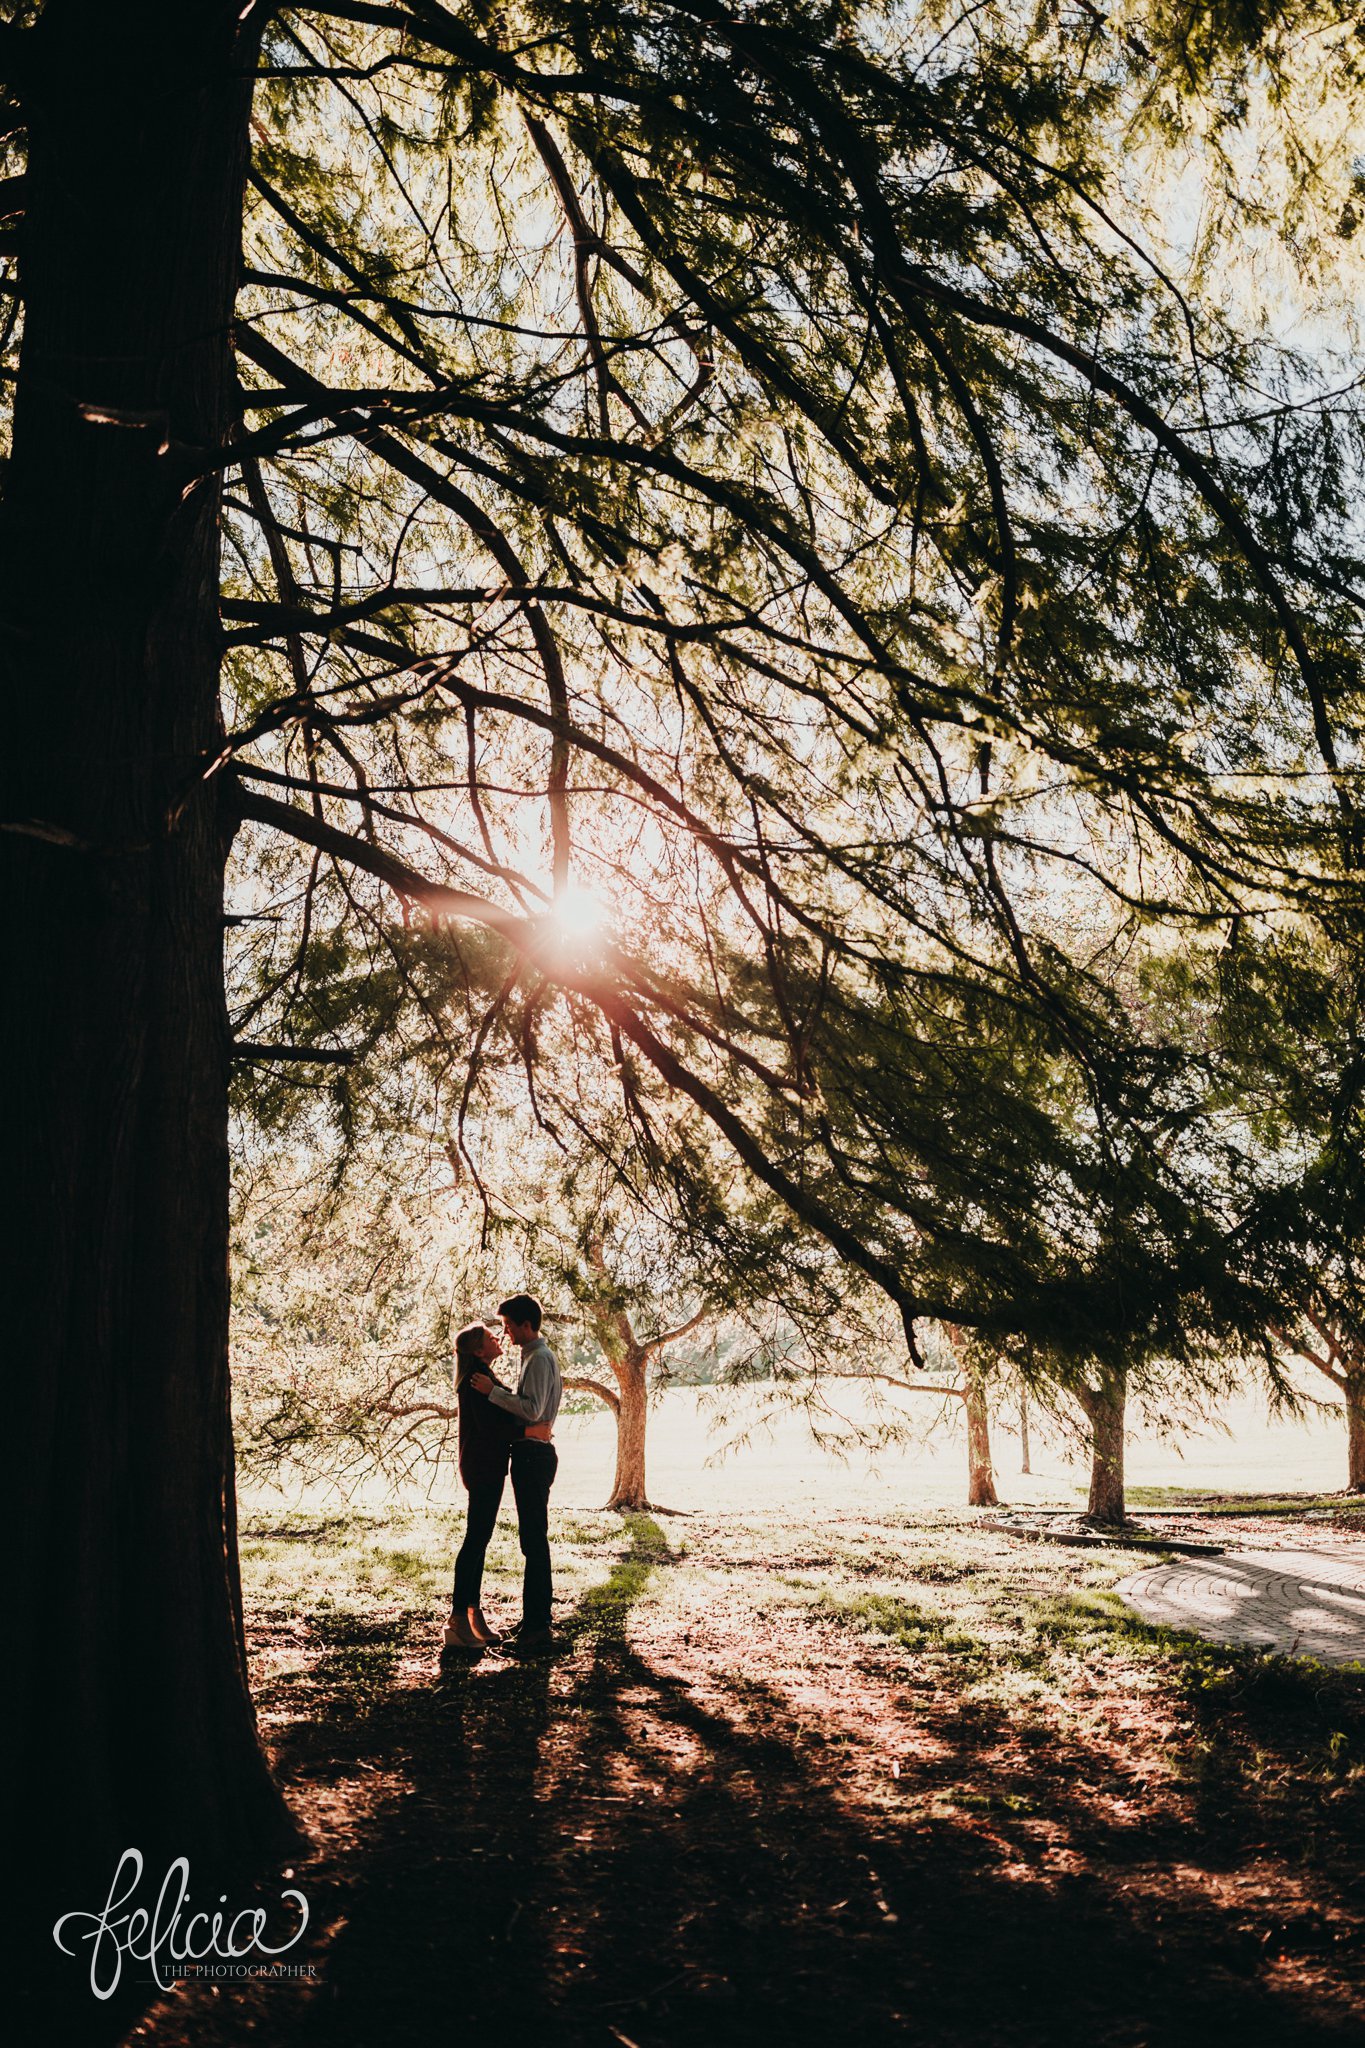 images by feliciathephotographer.com | wedding photographer | kansas city missouri | engagement | contrast | golden hour | sunset | true love | romantic | trees | forest | classic |